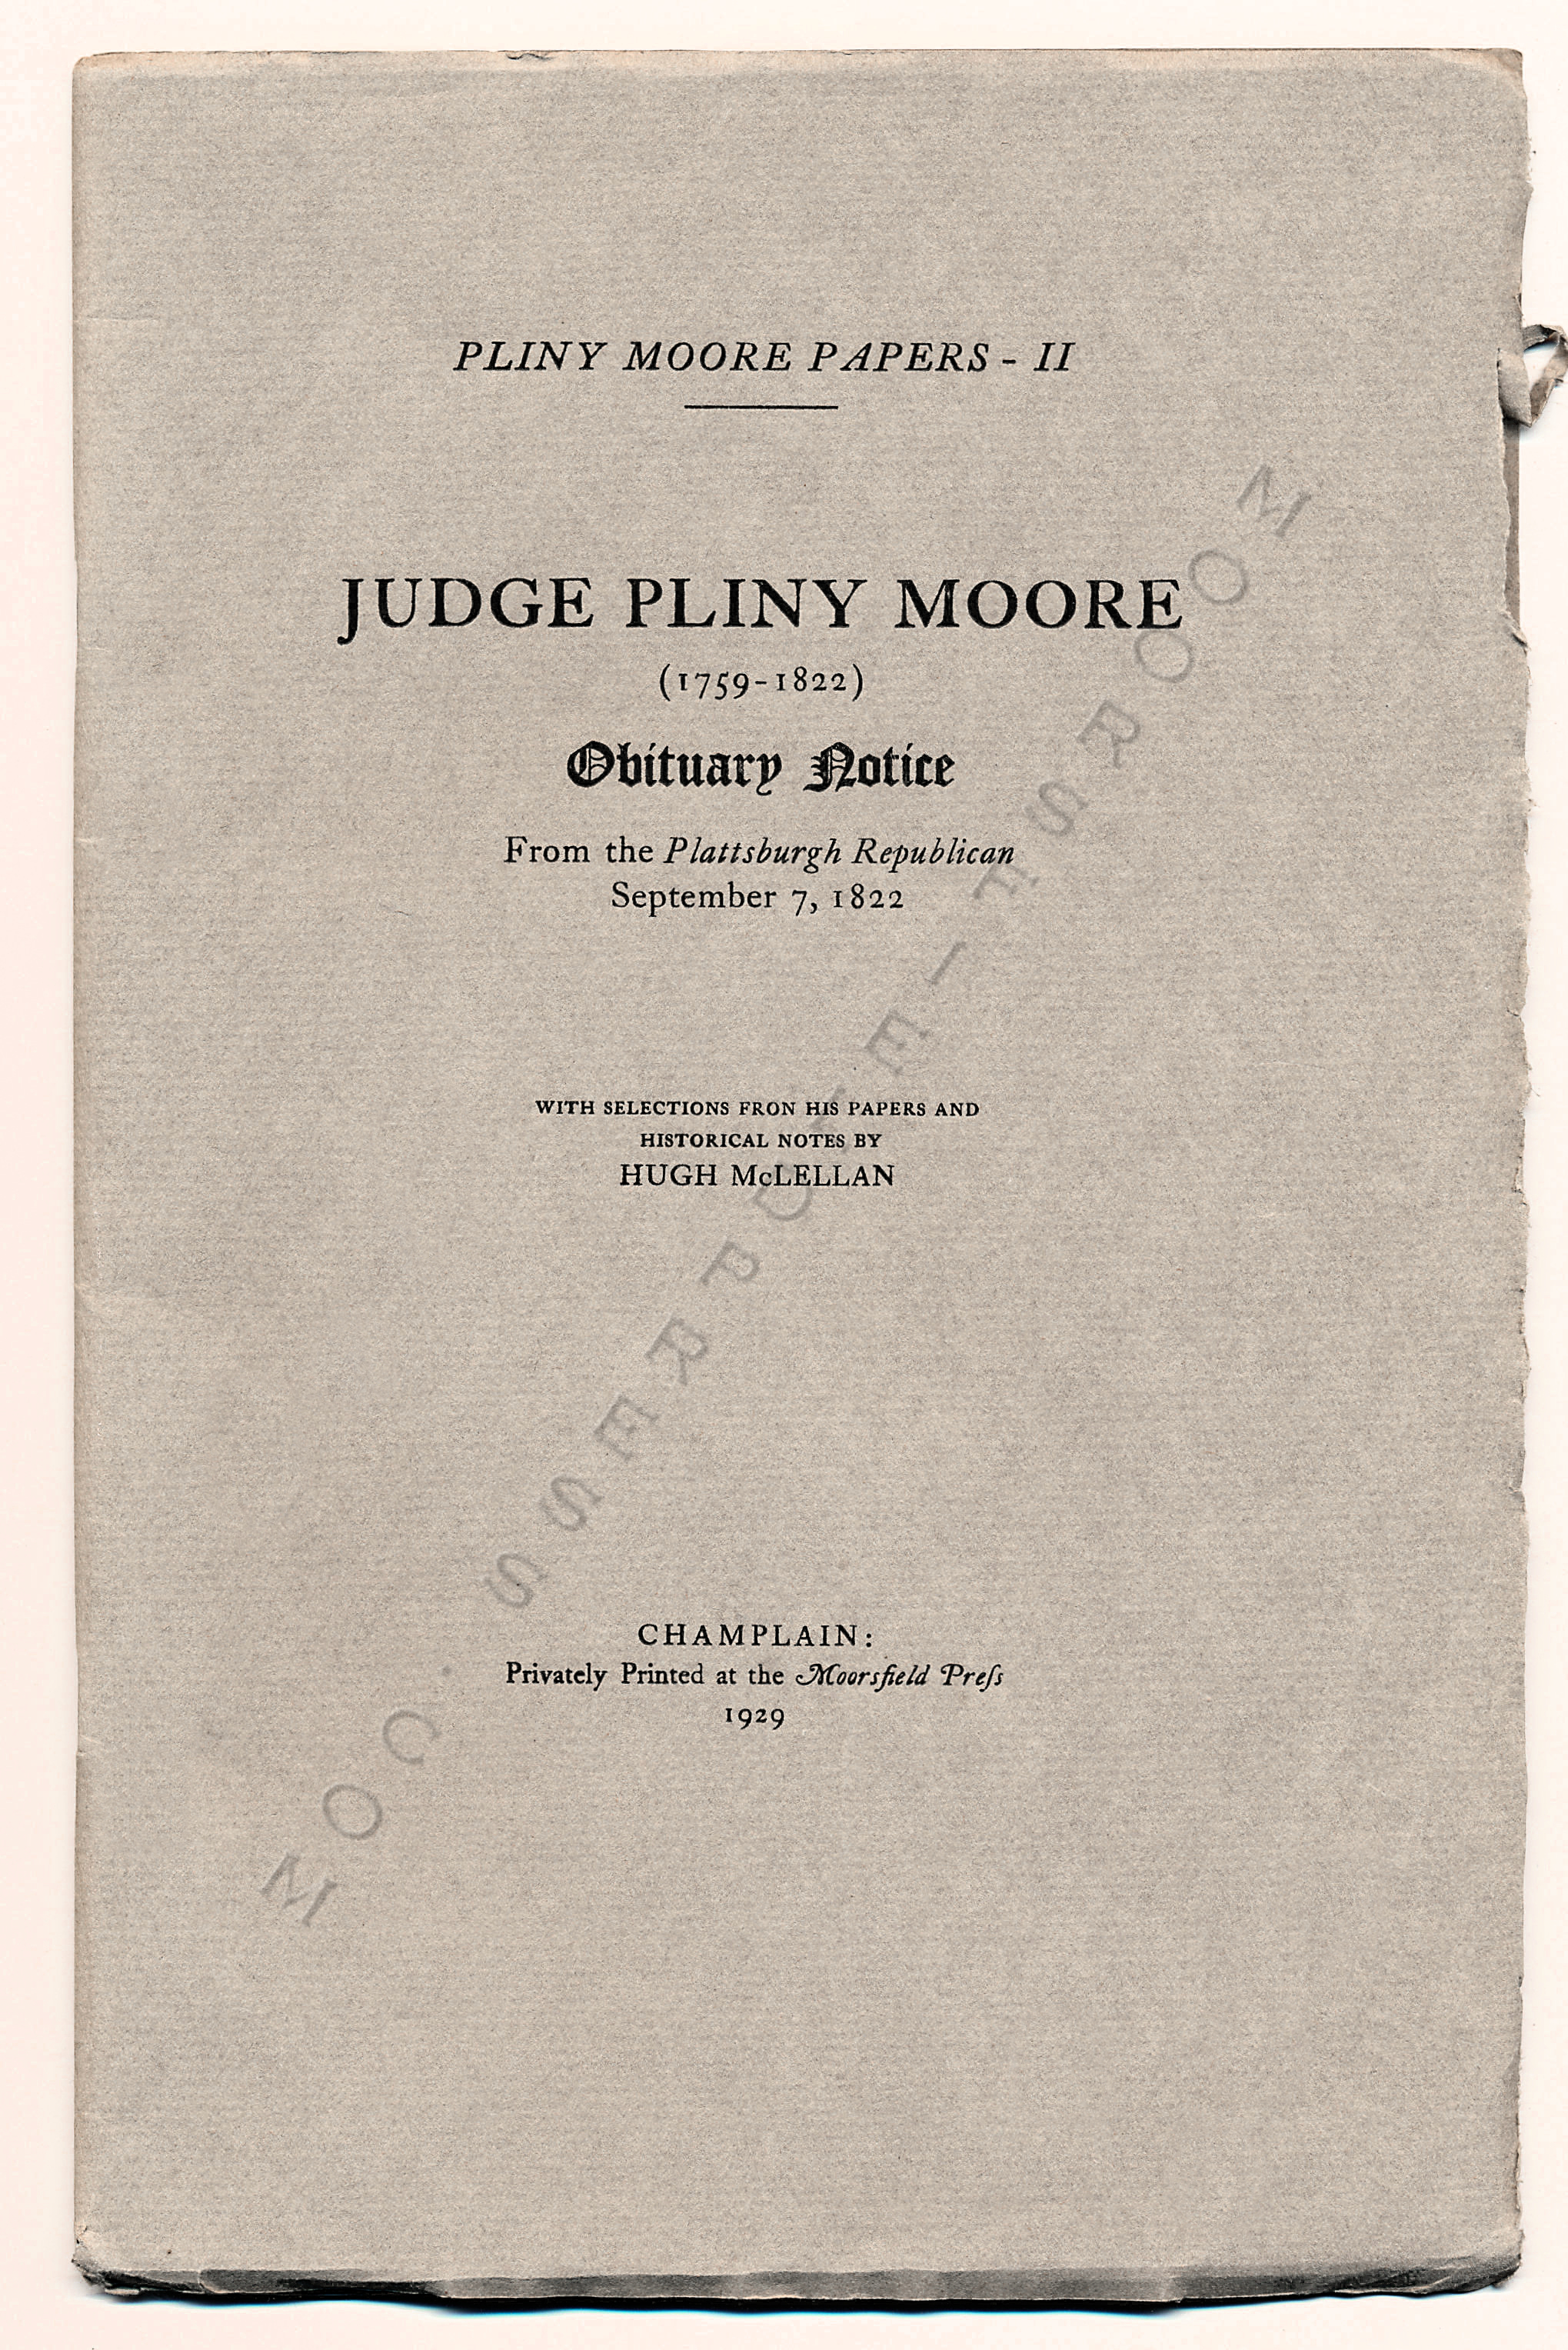 judge_pliny_moore_obituary_notice